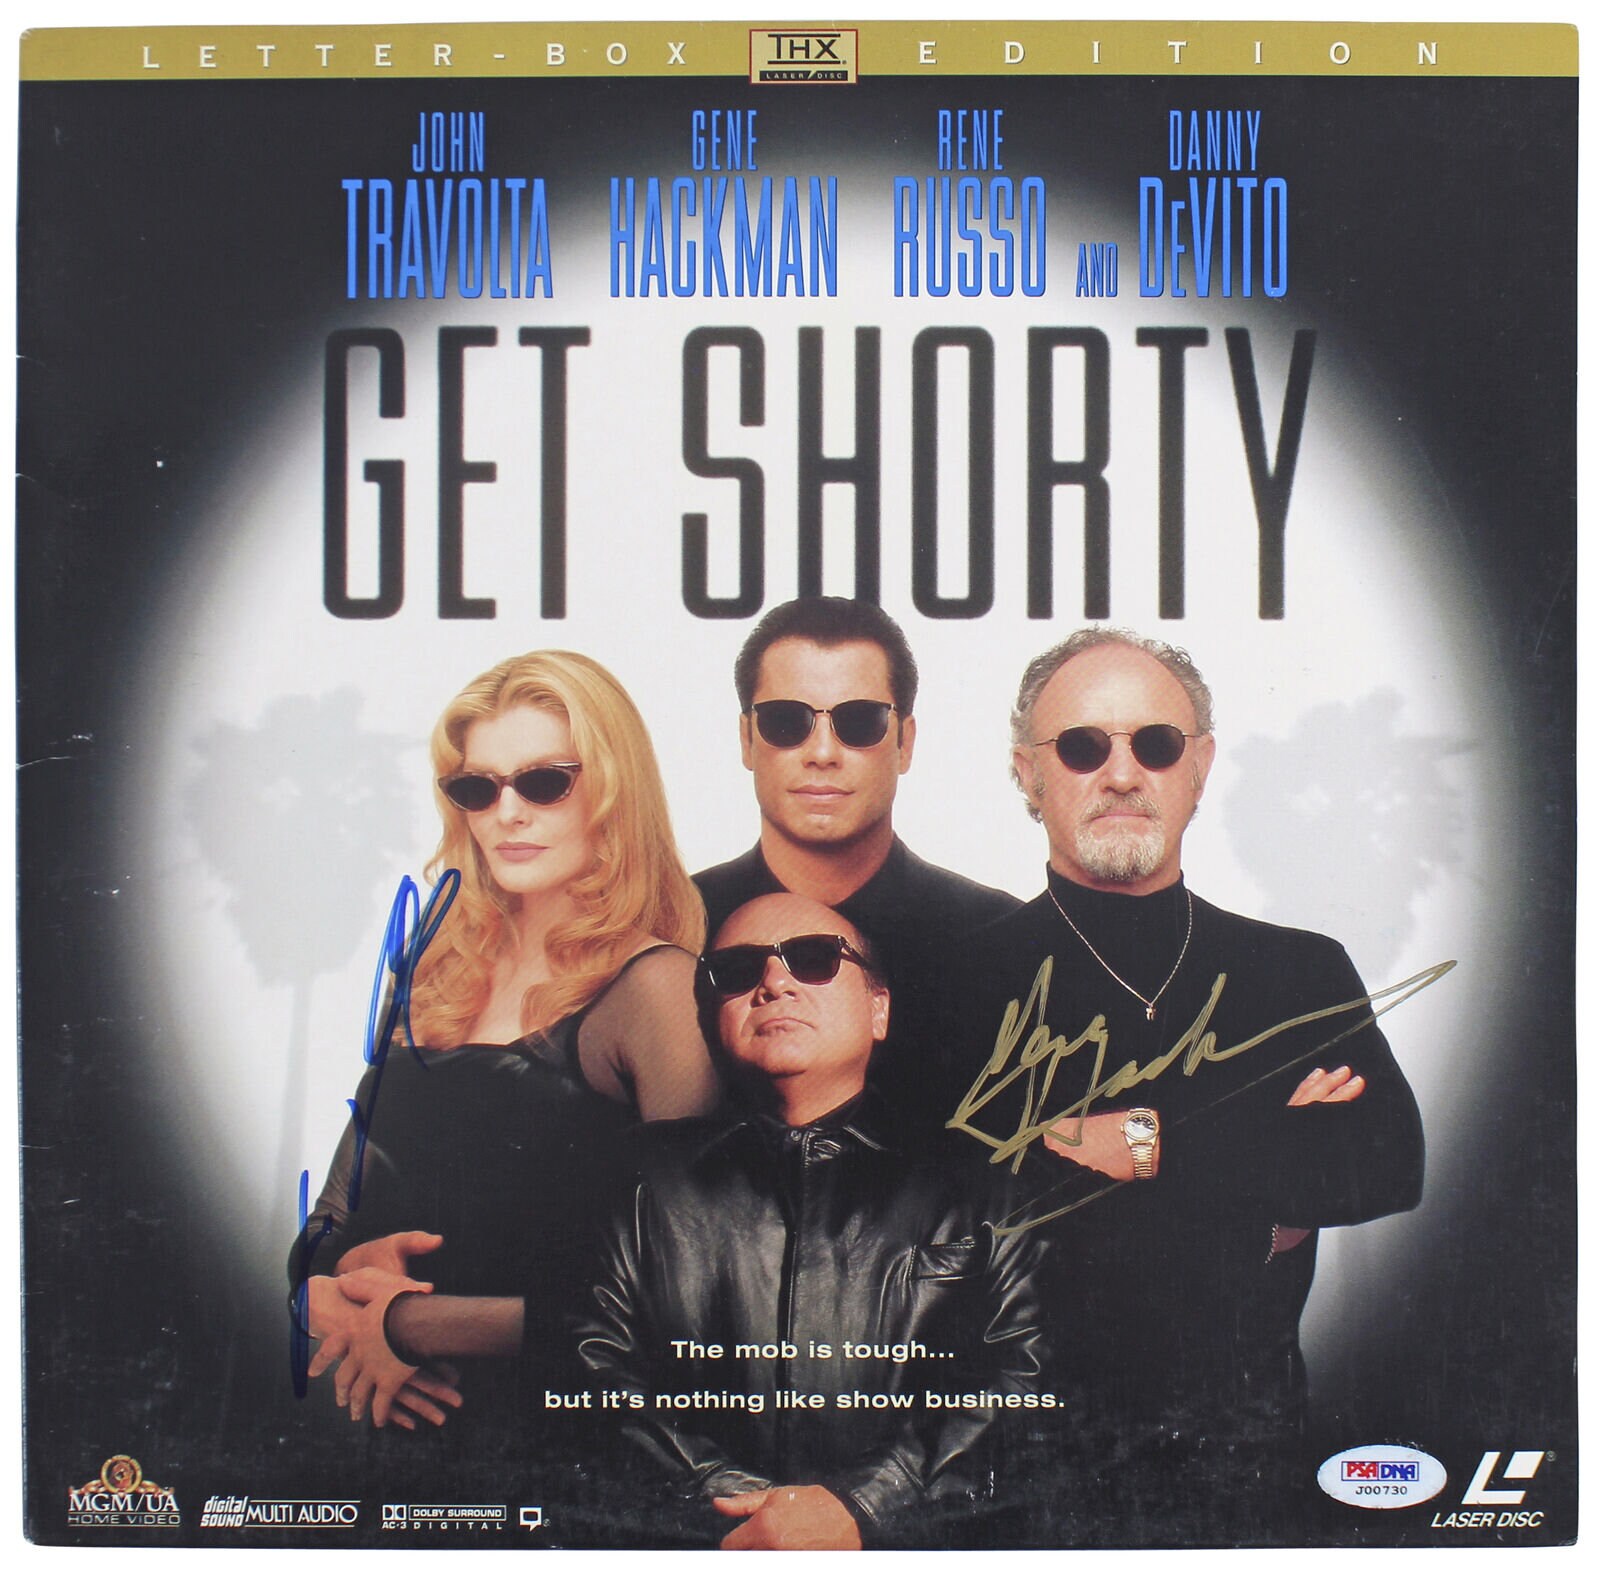 Get Shorty (1995) Original One-Sheet Movie Poster - Original Film Art -  Vintage Movie Posters